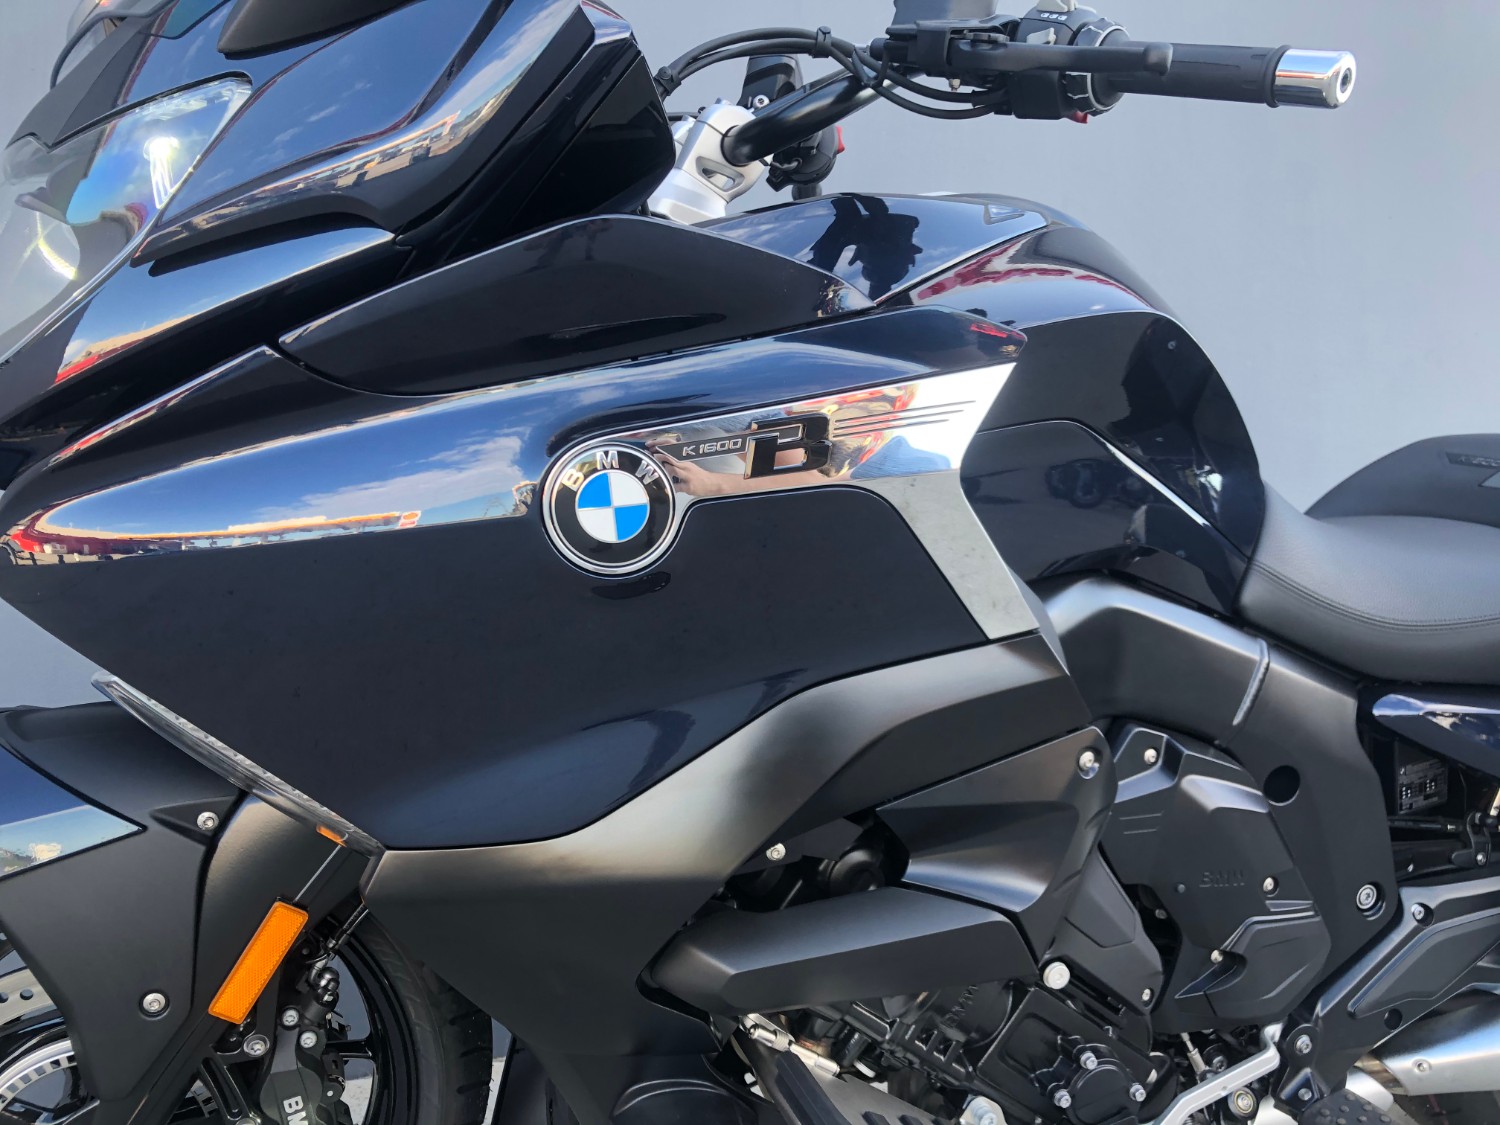 2019 BMW K1600 B Deluxe Motorcycle Image 10